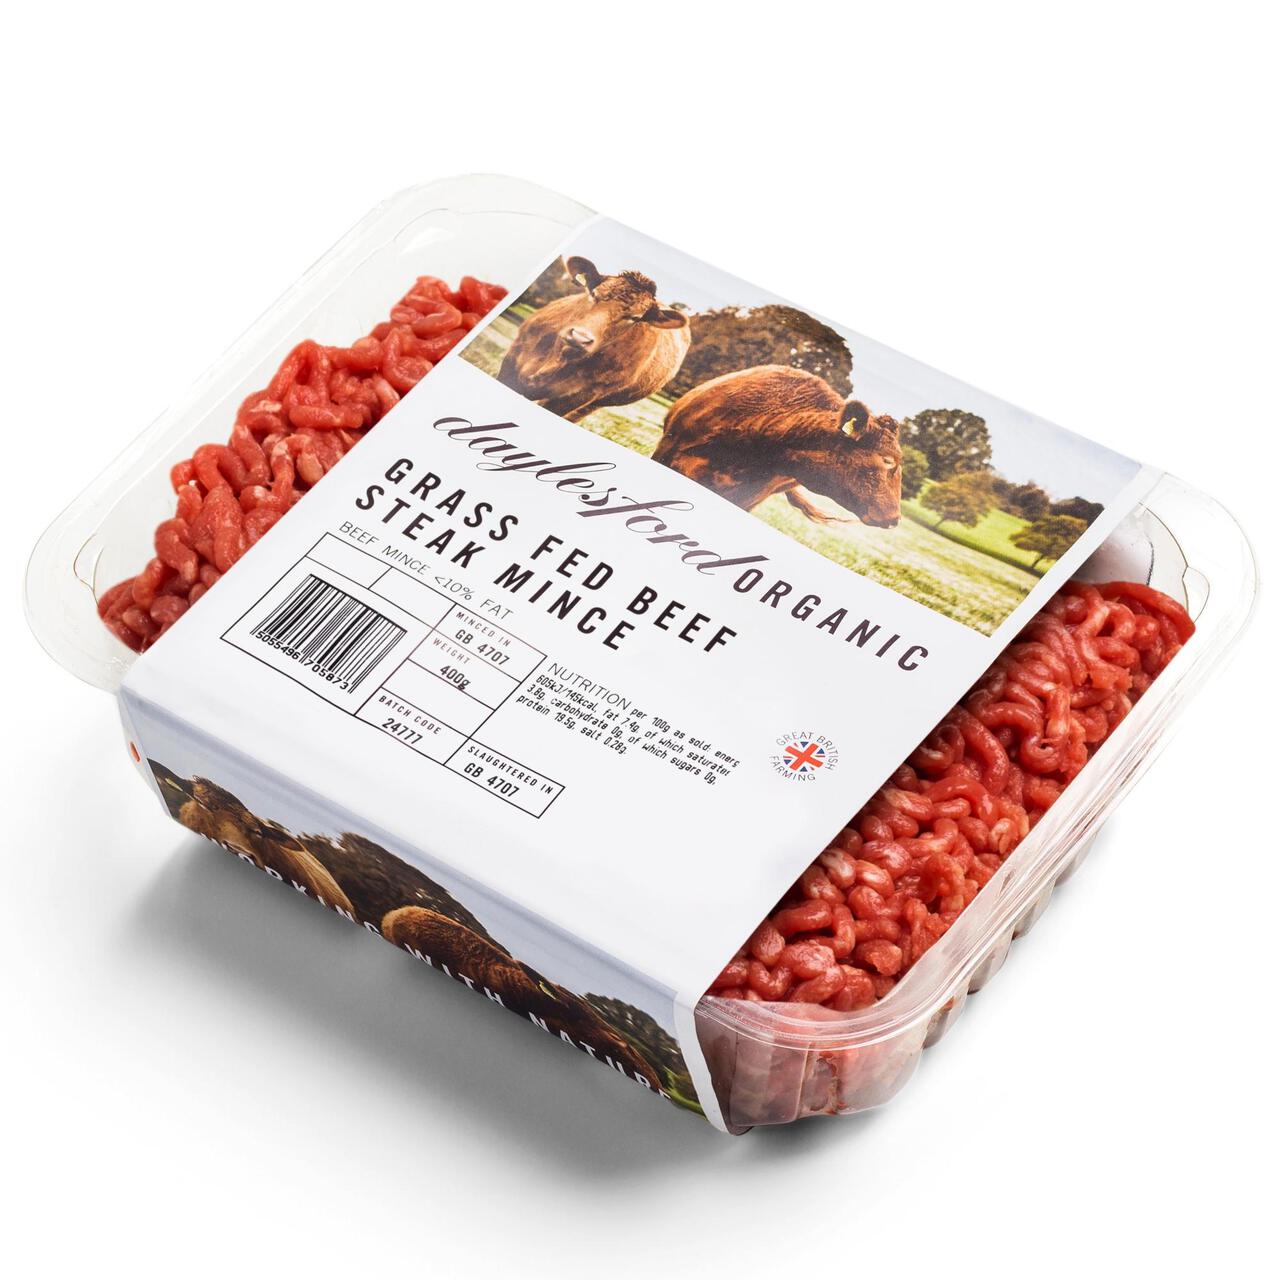 Daylesford Organic Pastured 10% Fat Beef Mince 400g